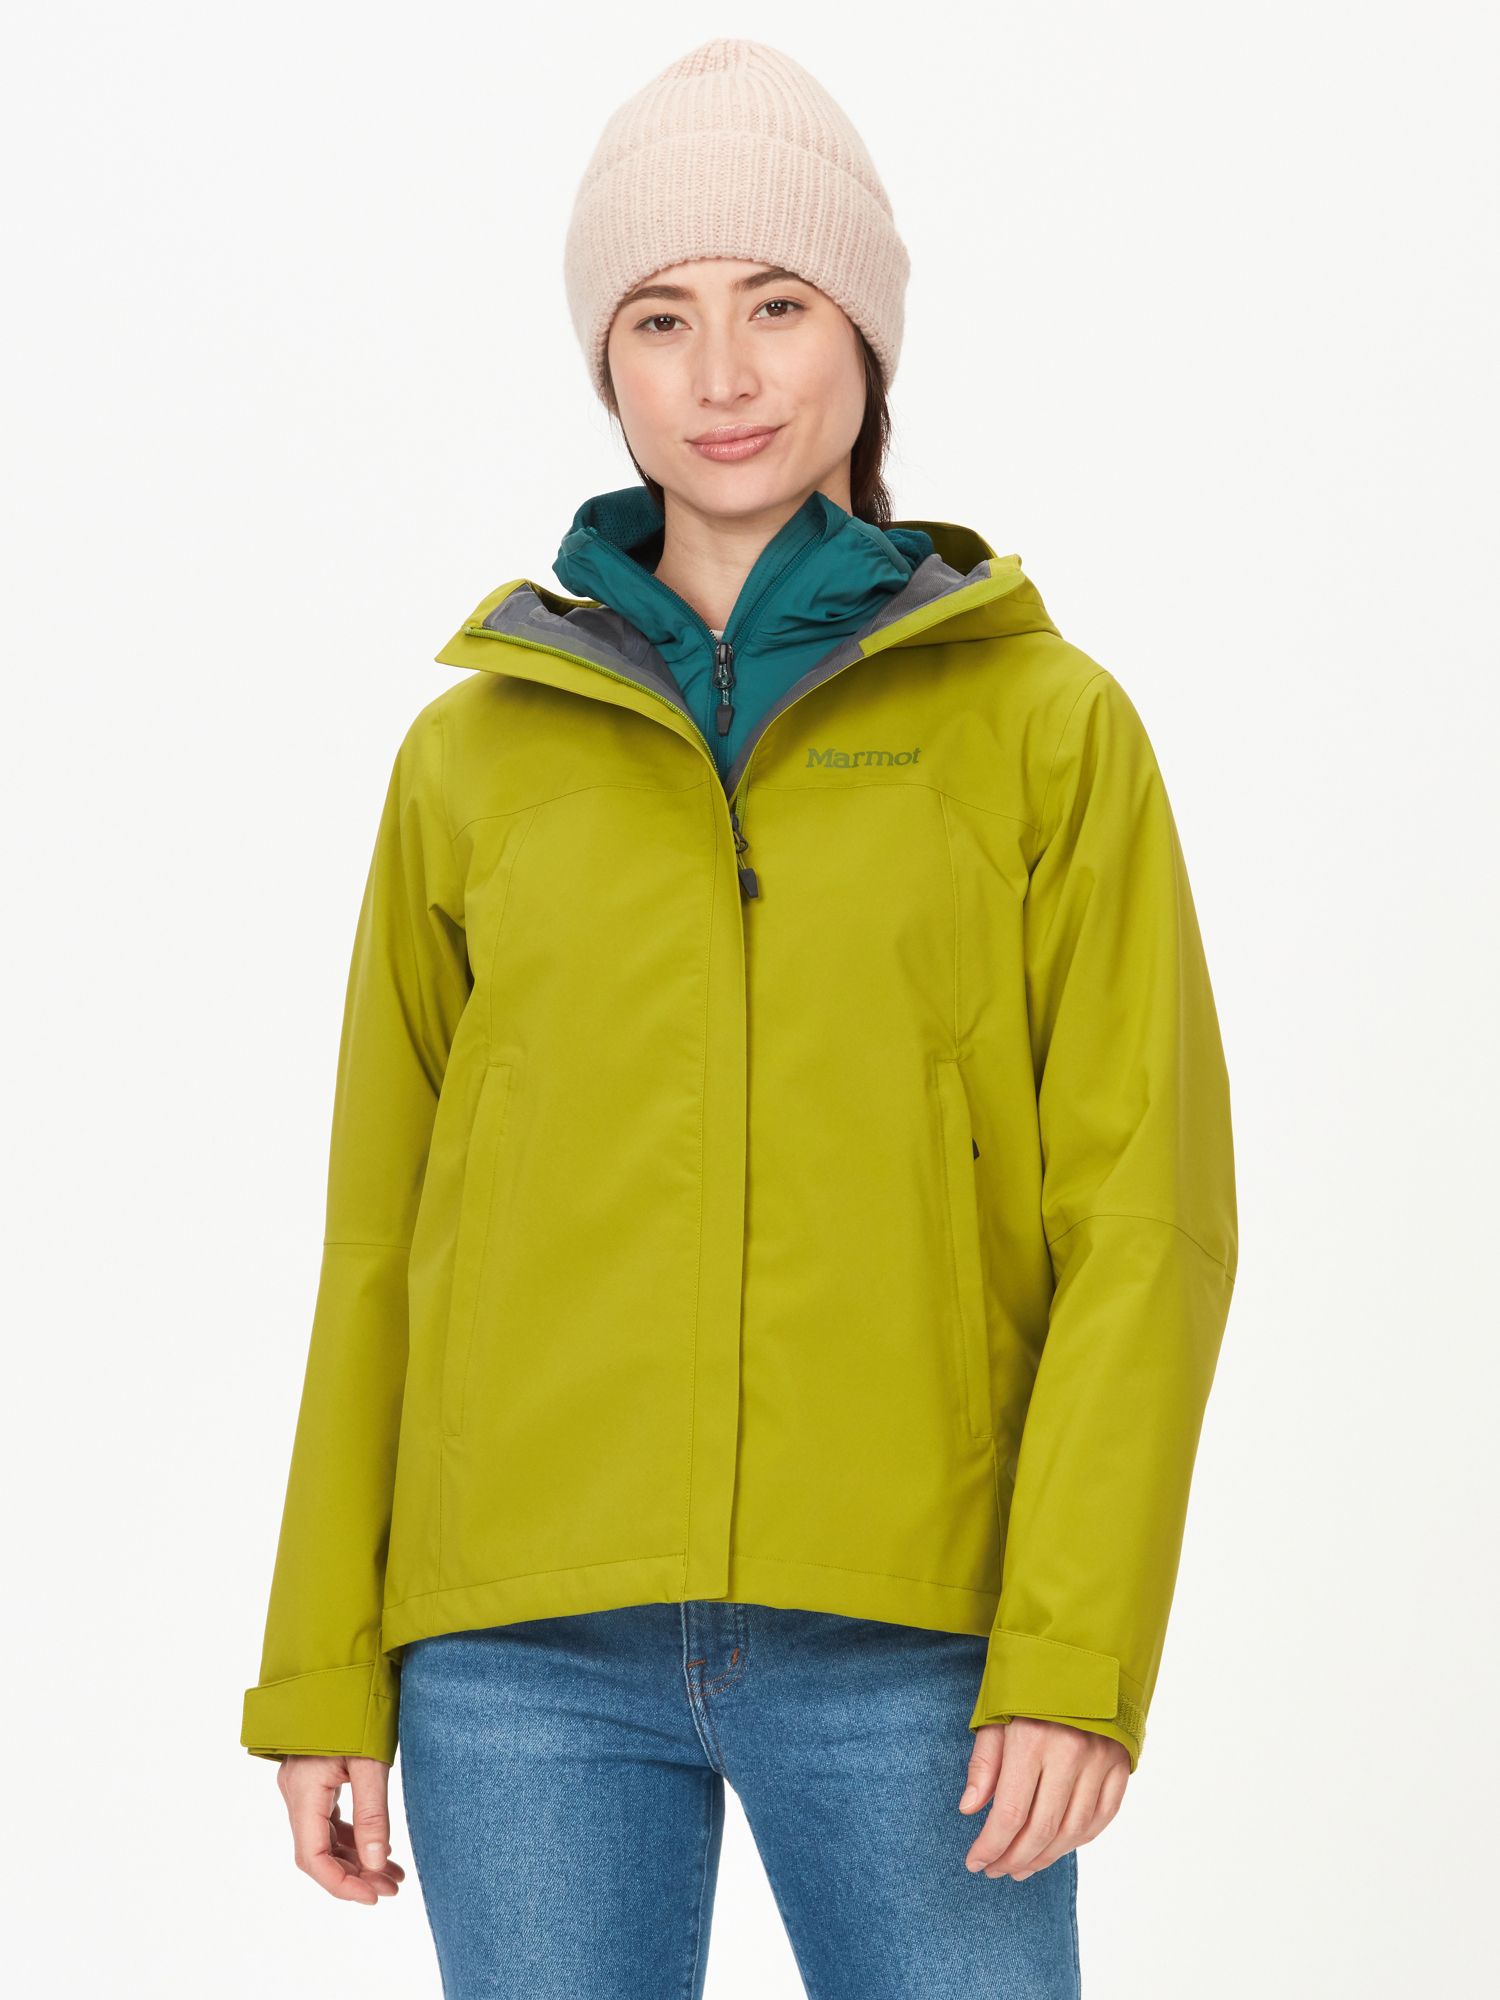 Women's PreCip® Eco Pro Jacket | Marmot